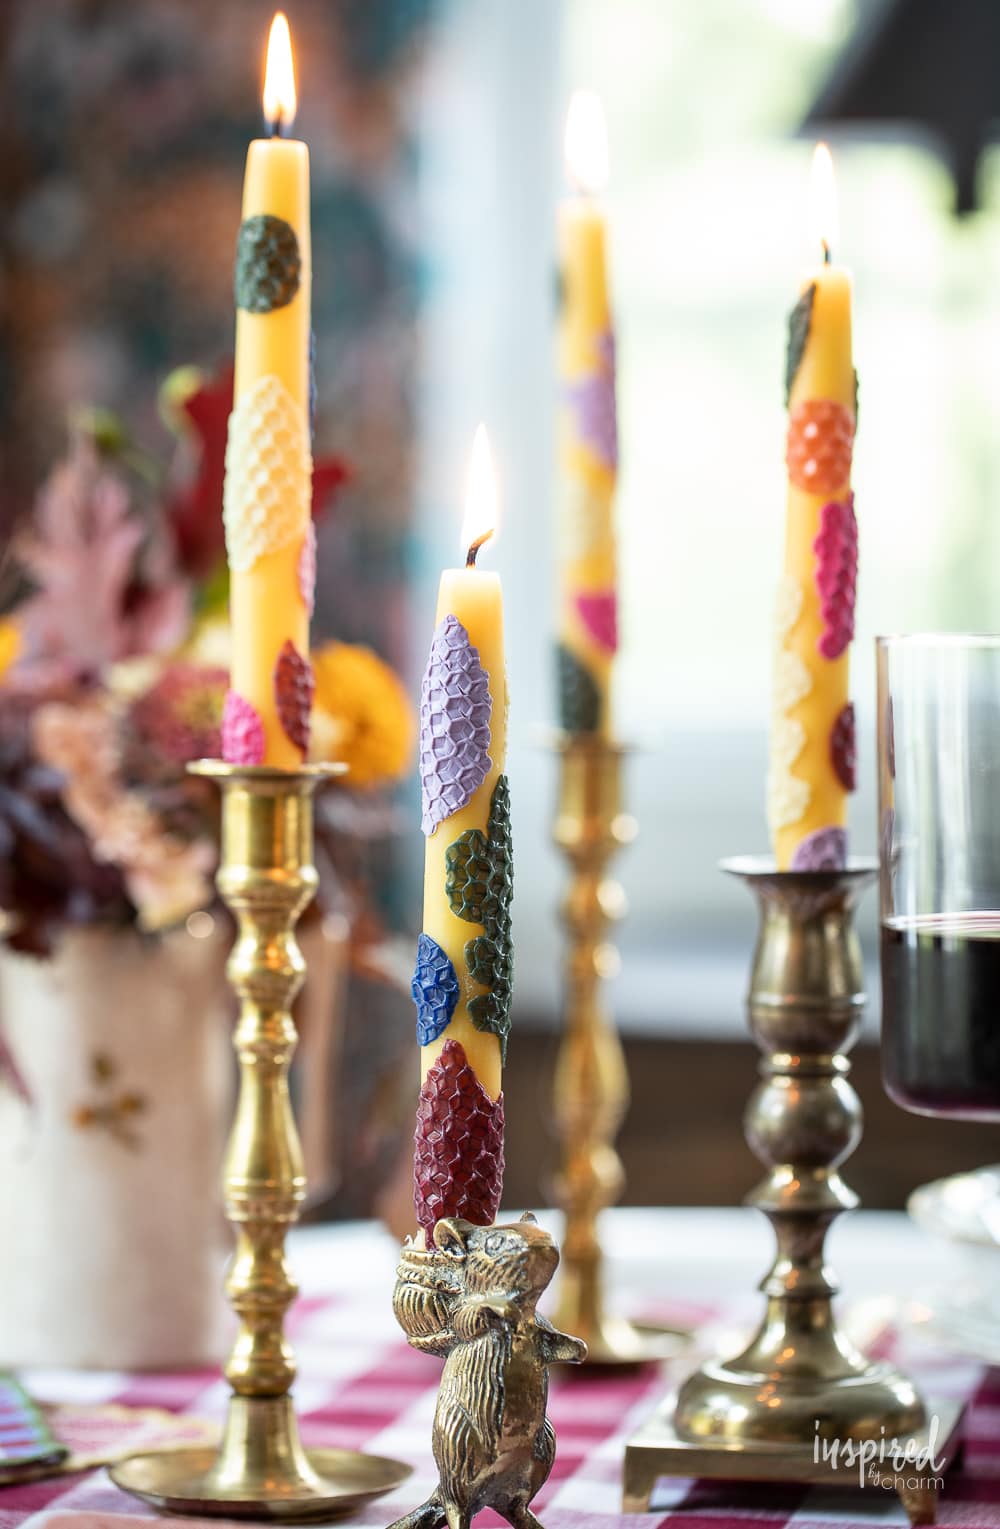 DIY Decorative Taper Candles in brass candlesticks.